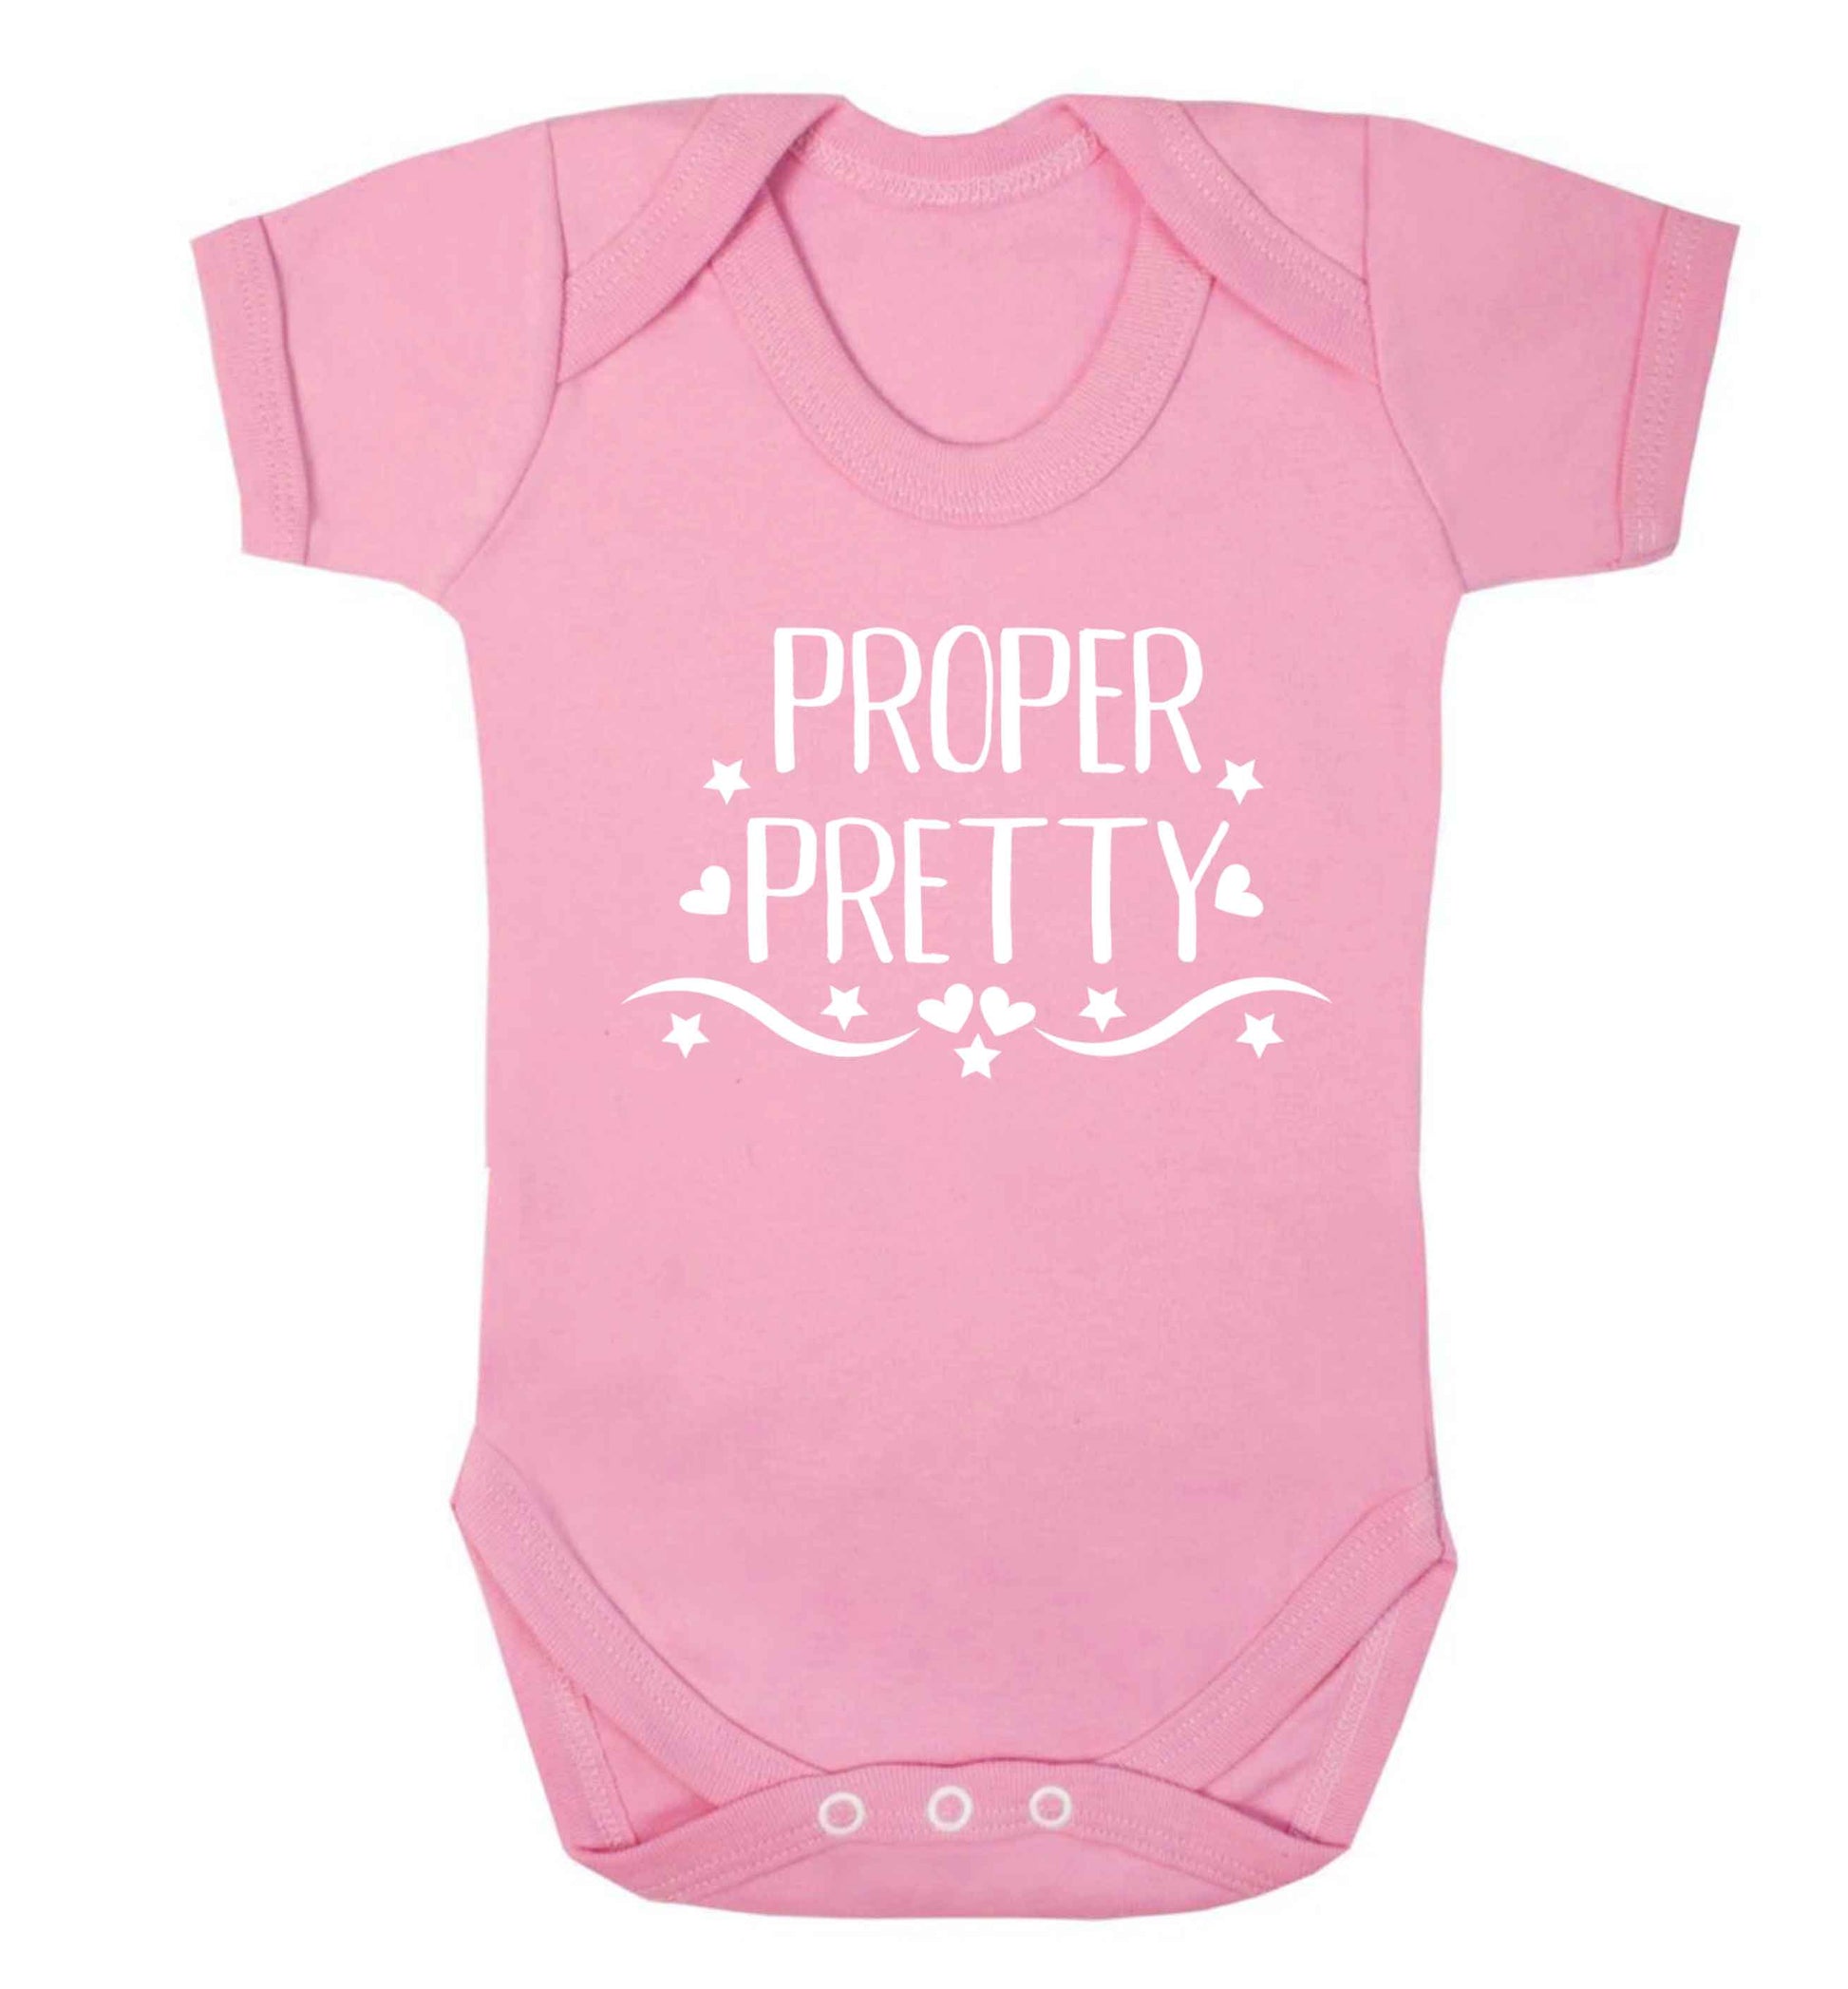 Proper pretty Baby Vest pale pink 18-24 months